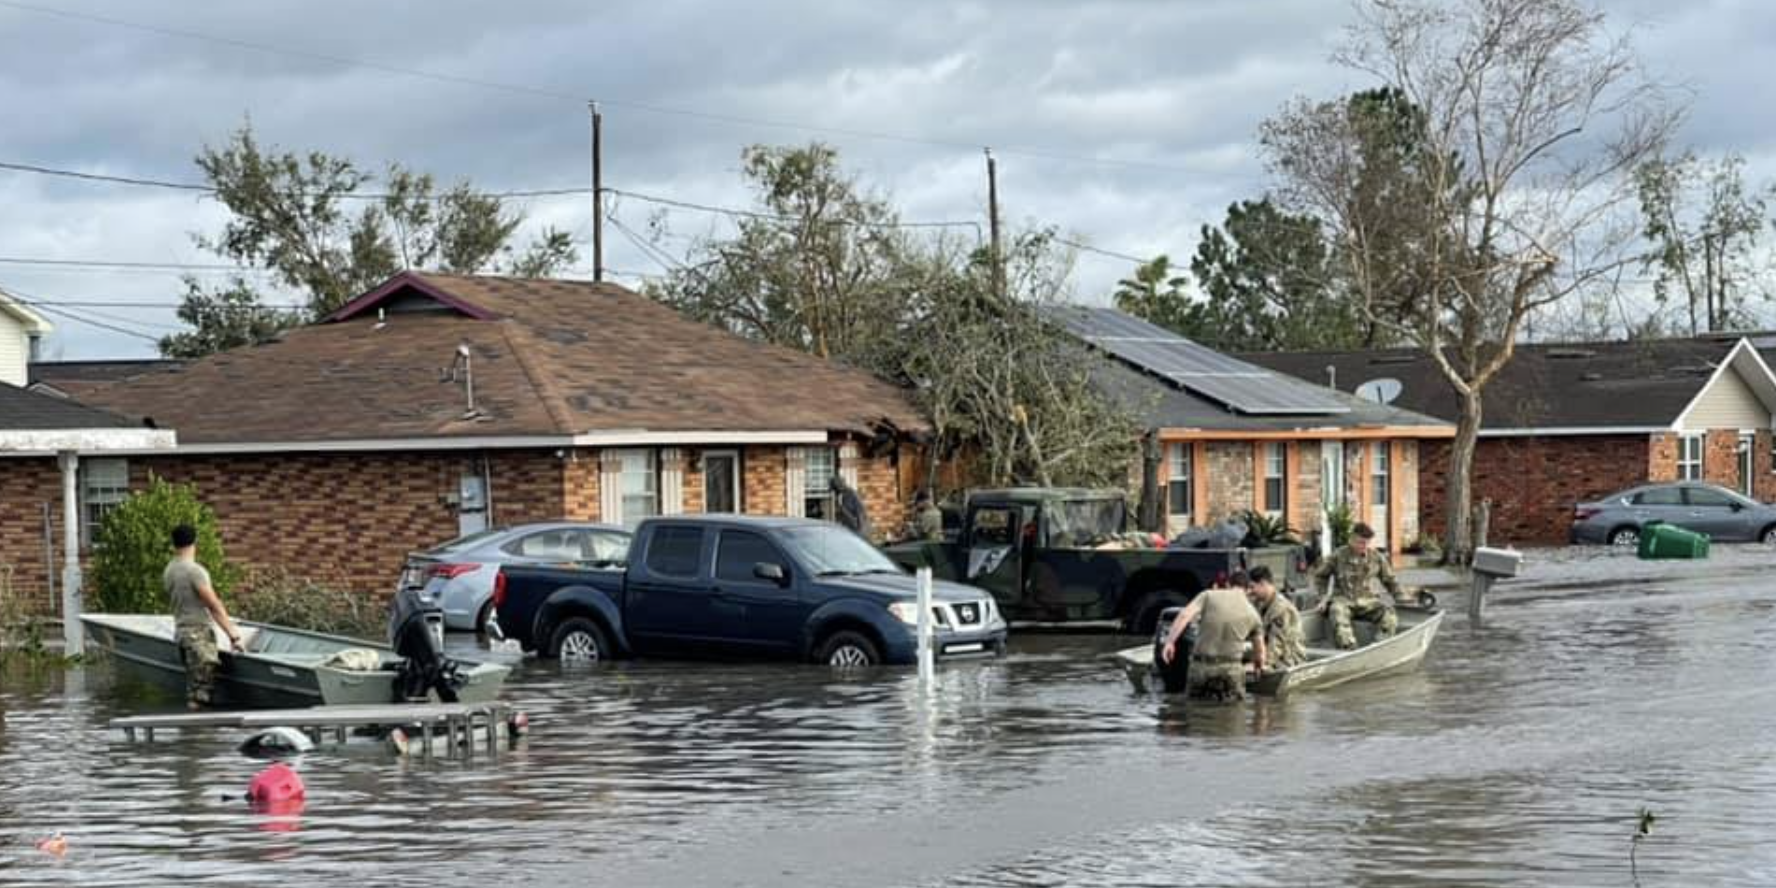 Louisiana National Guard performs a rescue in Louisiana